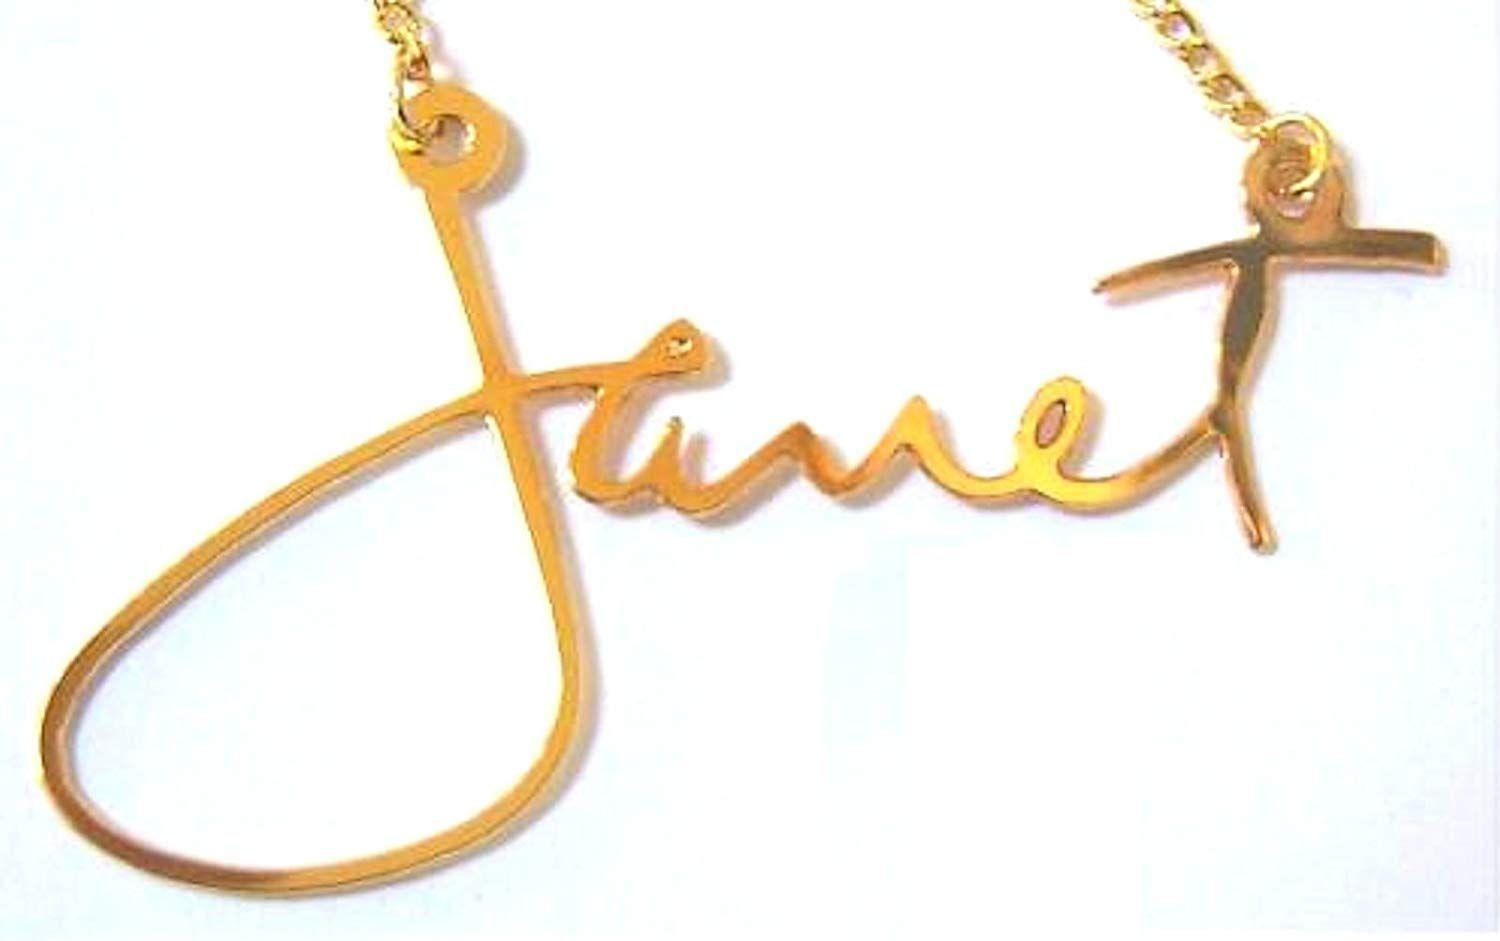 Janet Logo - Janet Jackson Signature Logo Gold Colored Metal Pendant Necklace